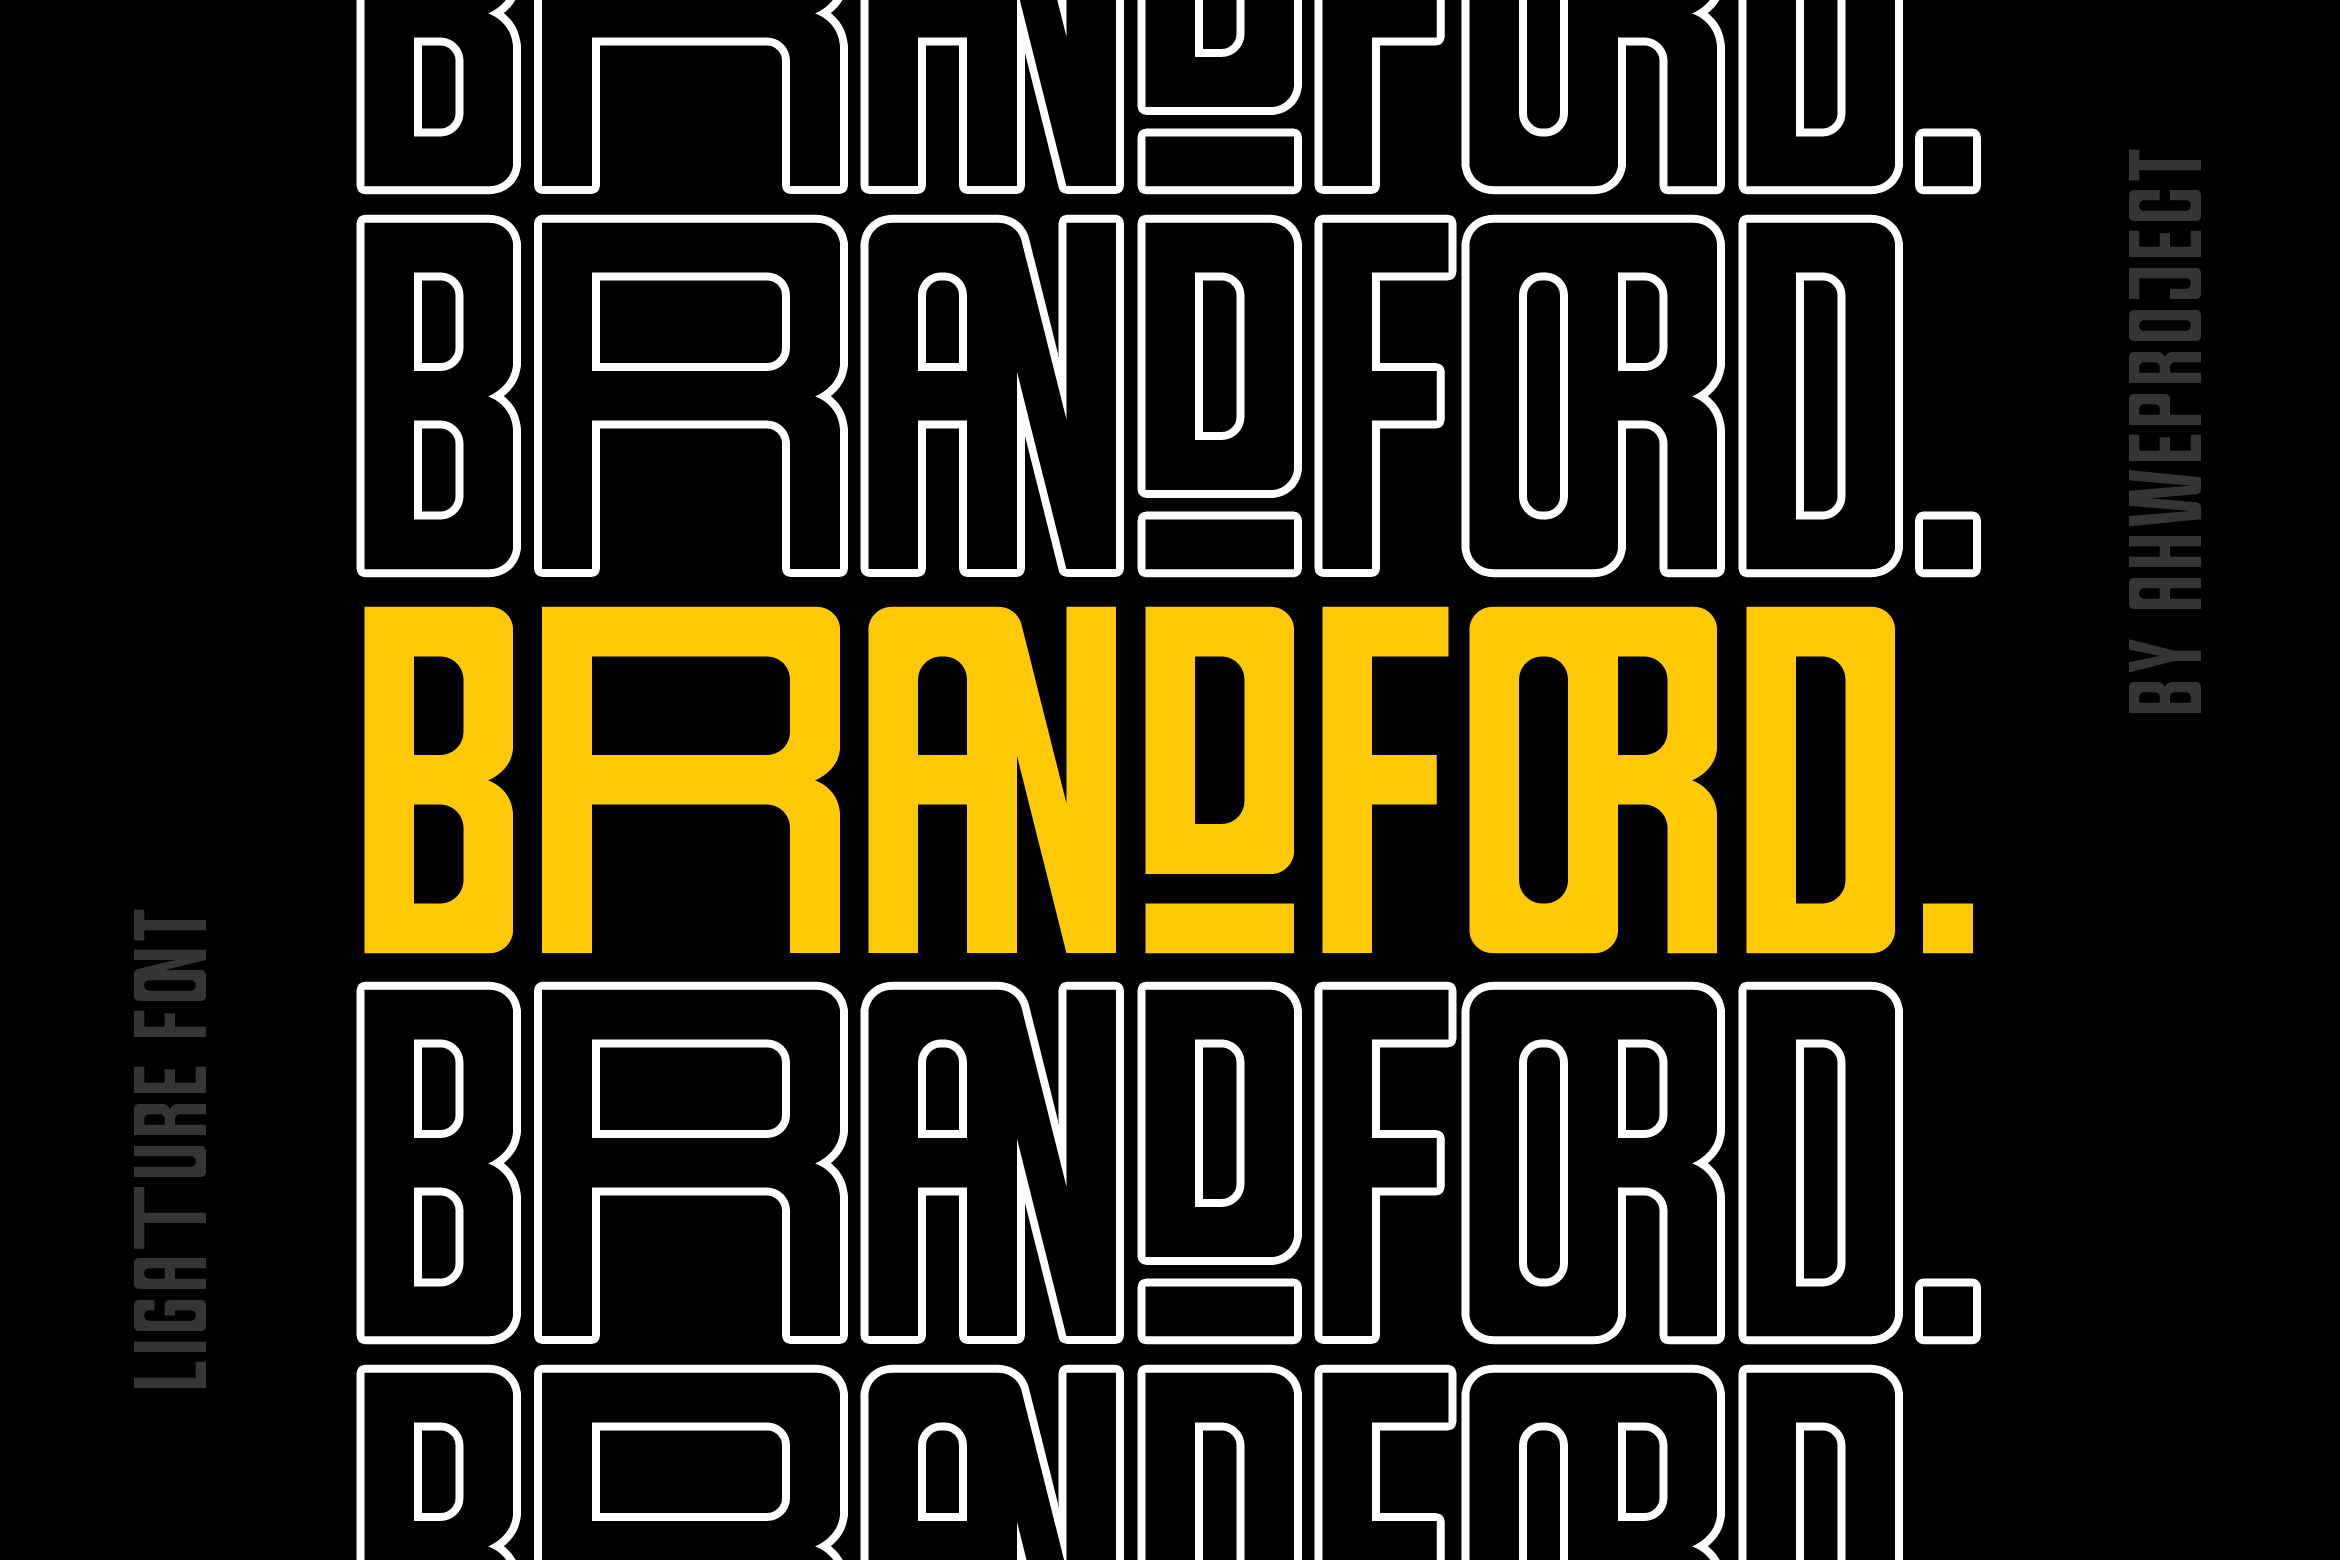 Brandford